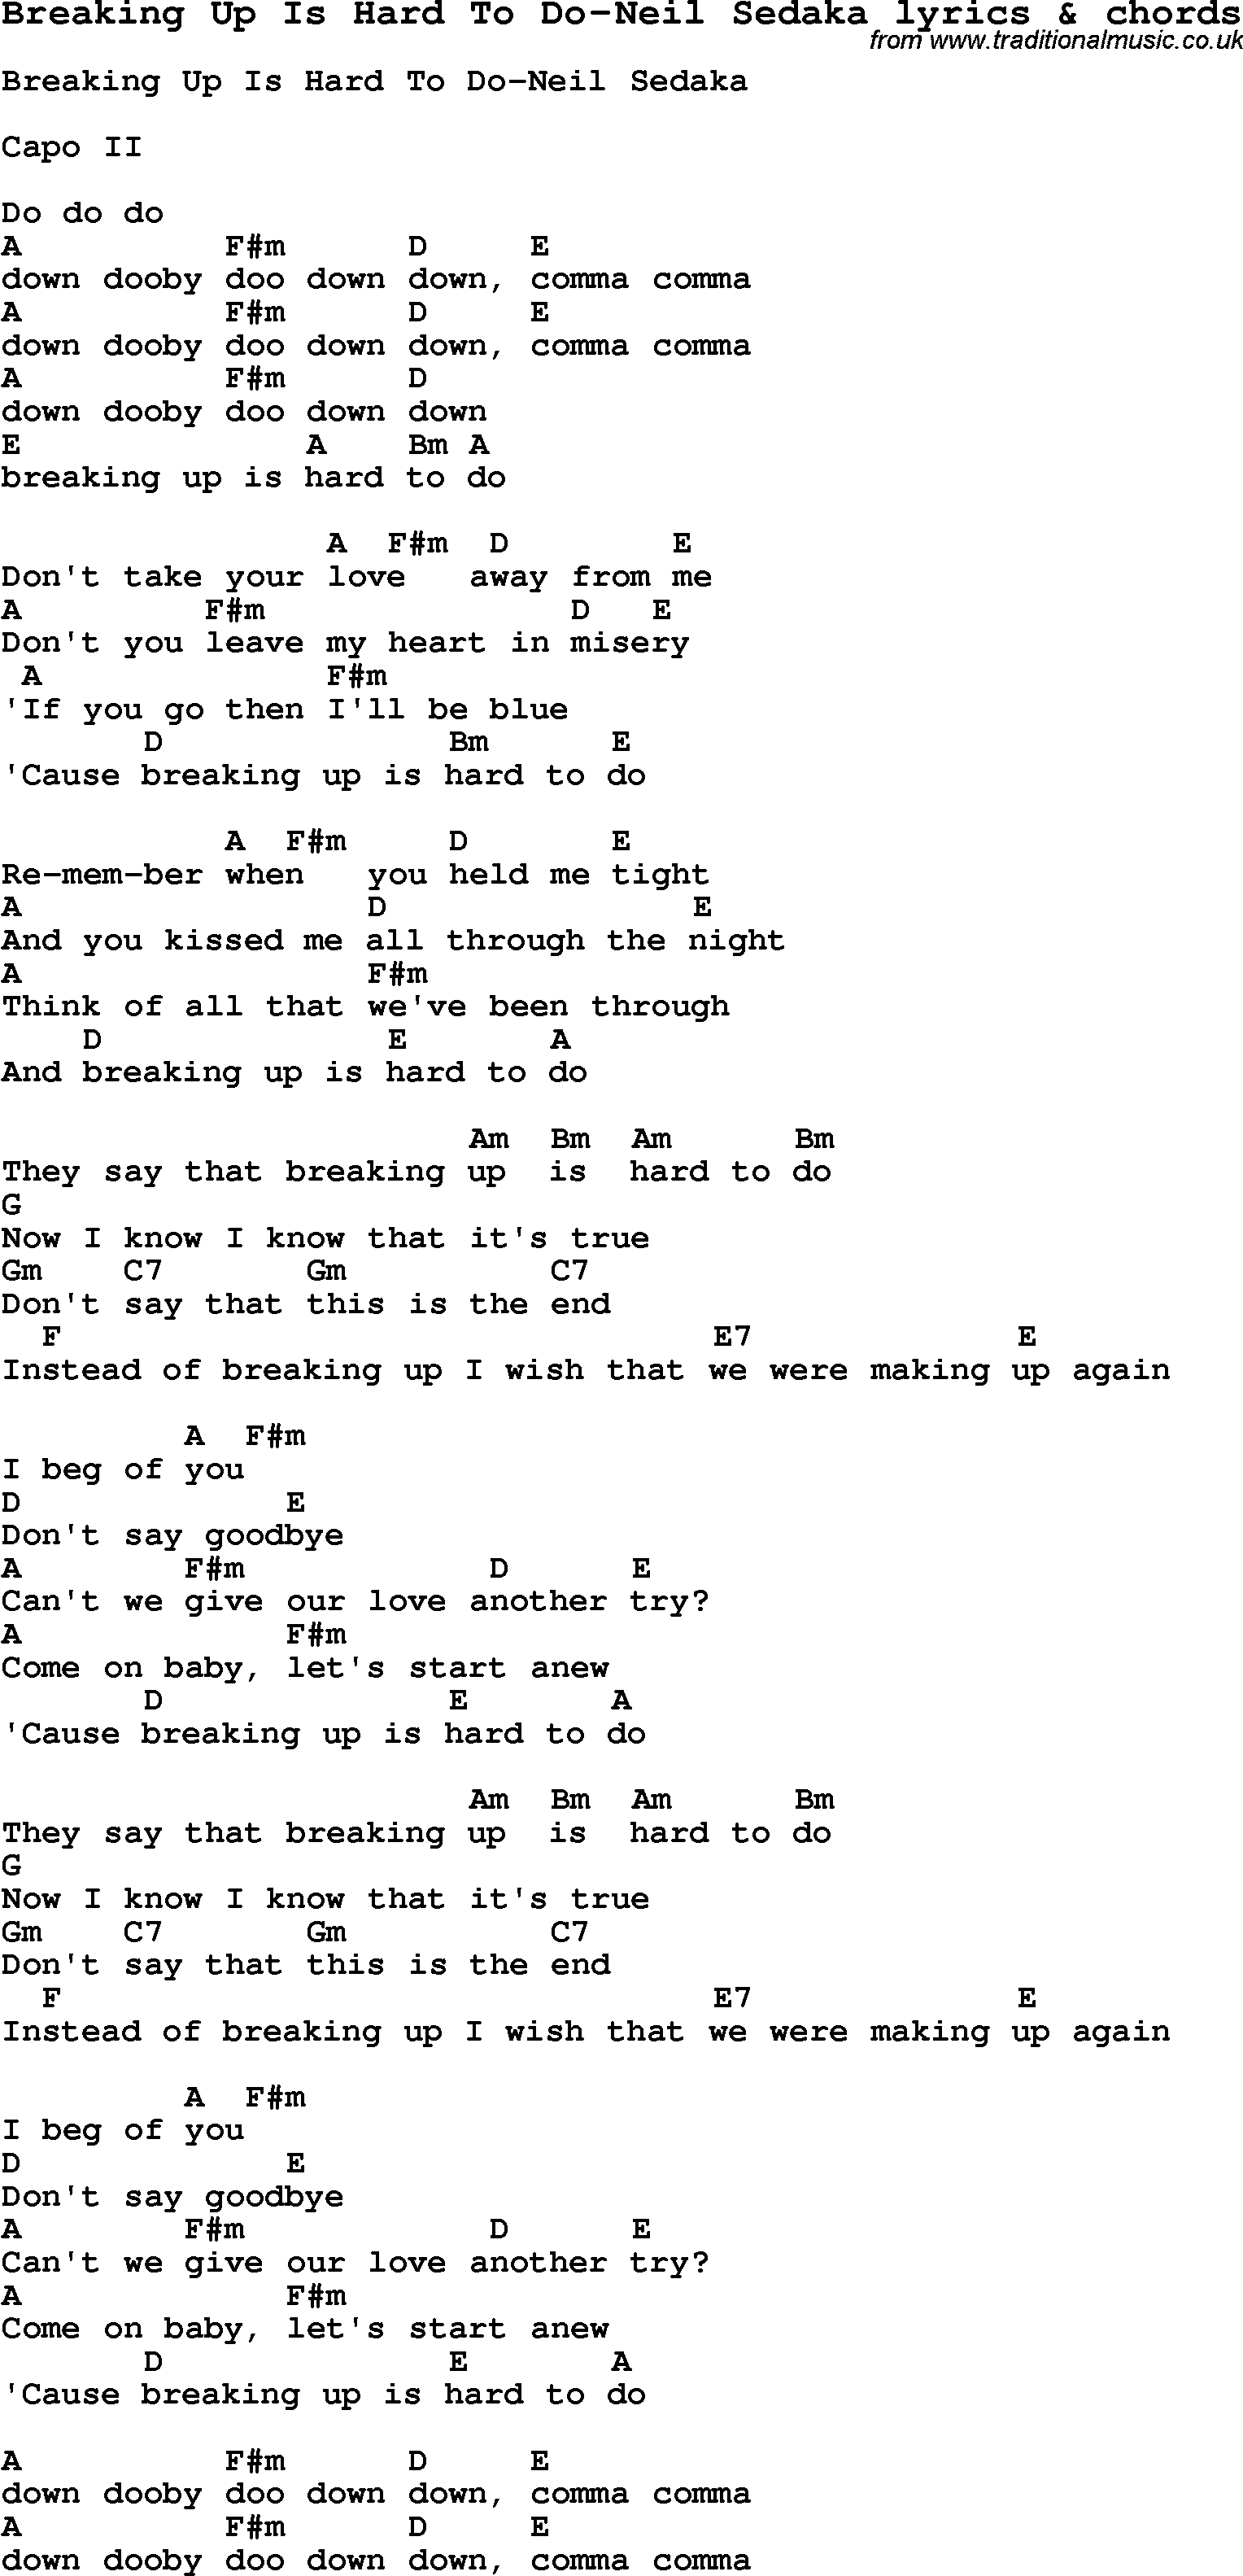 Love Song Lyrics for: Breaking Up Is Hard To Do-Neil Sedaka with chords for Ukulele, Guitar Banjo etc.